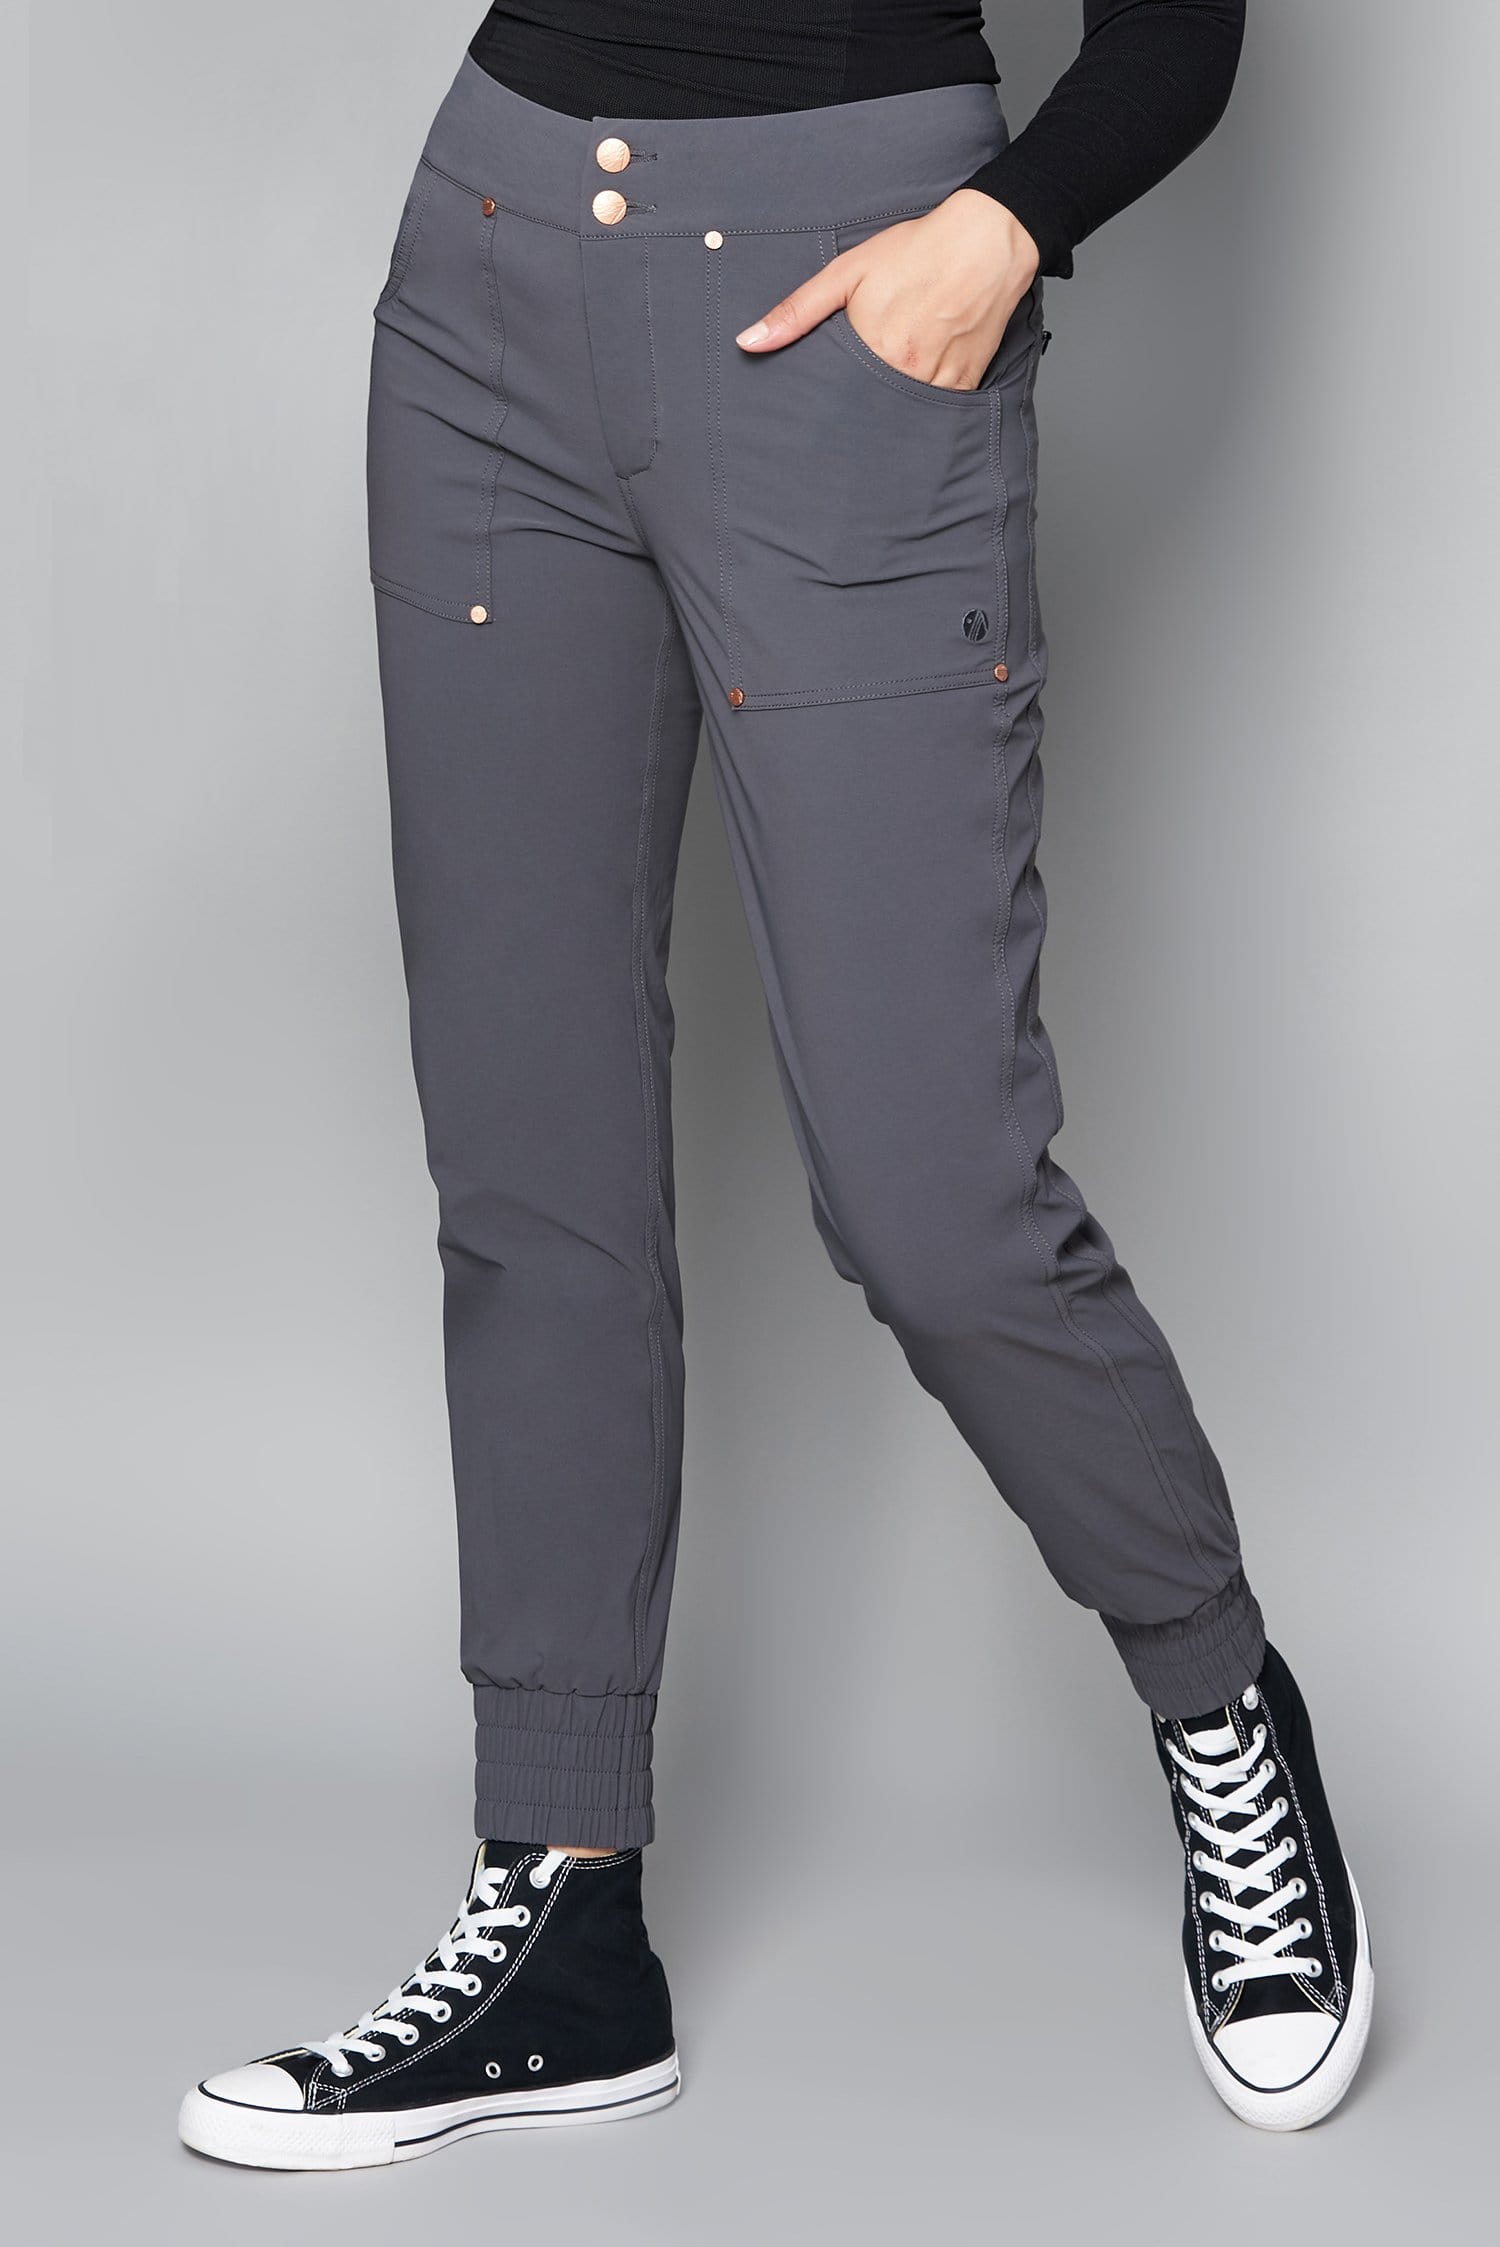 Casual Stroll Pants - Storm Grey - 26r / Uk8 - Womens - Acai Outdoorwear